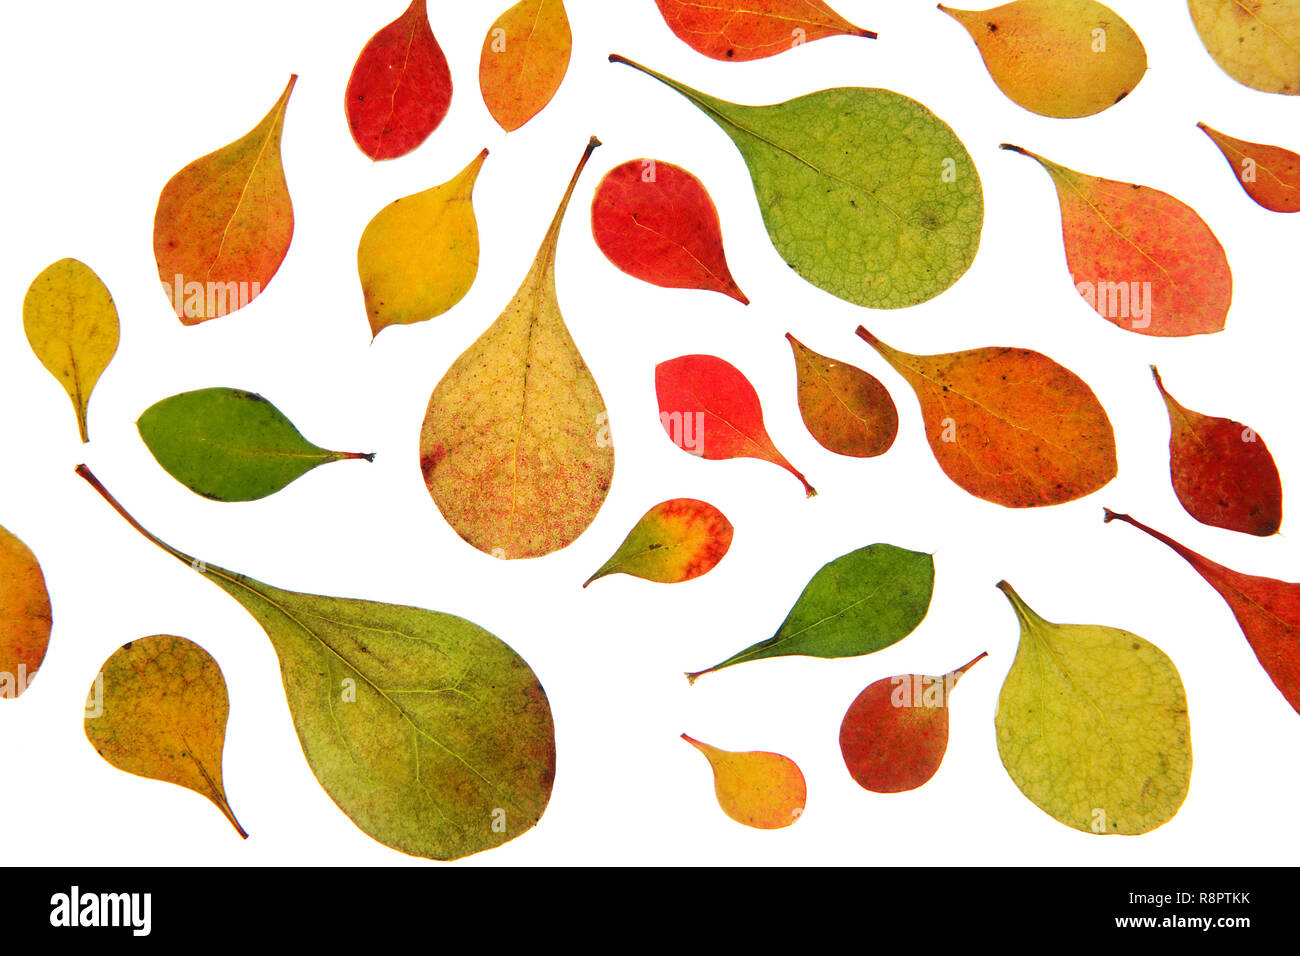 Close-up of Barberry leaves in autumn     Photo © Roberto Sacco/Sintesi/Alamy Stock Photo Stock Photo